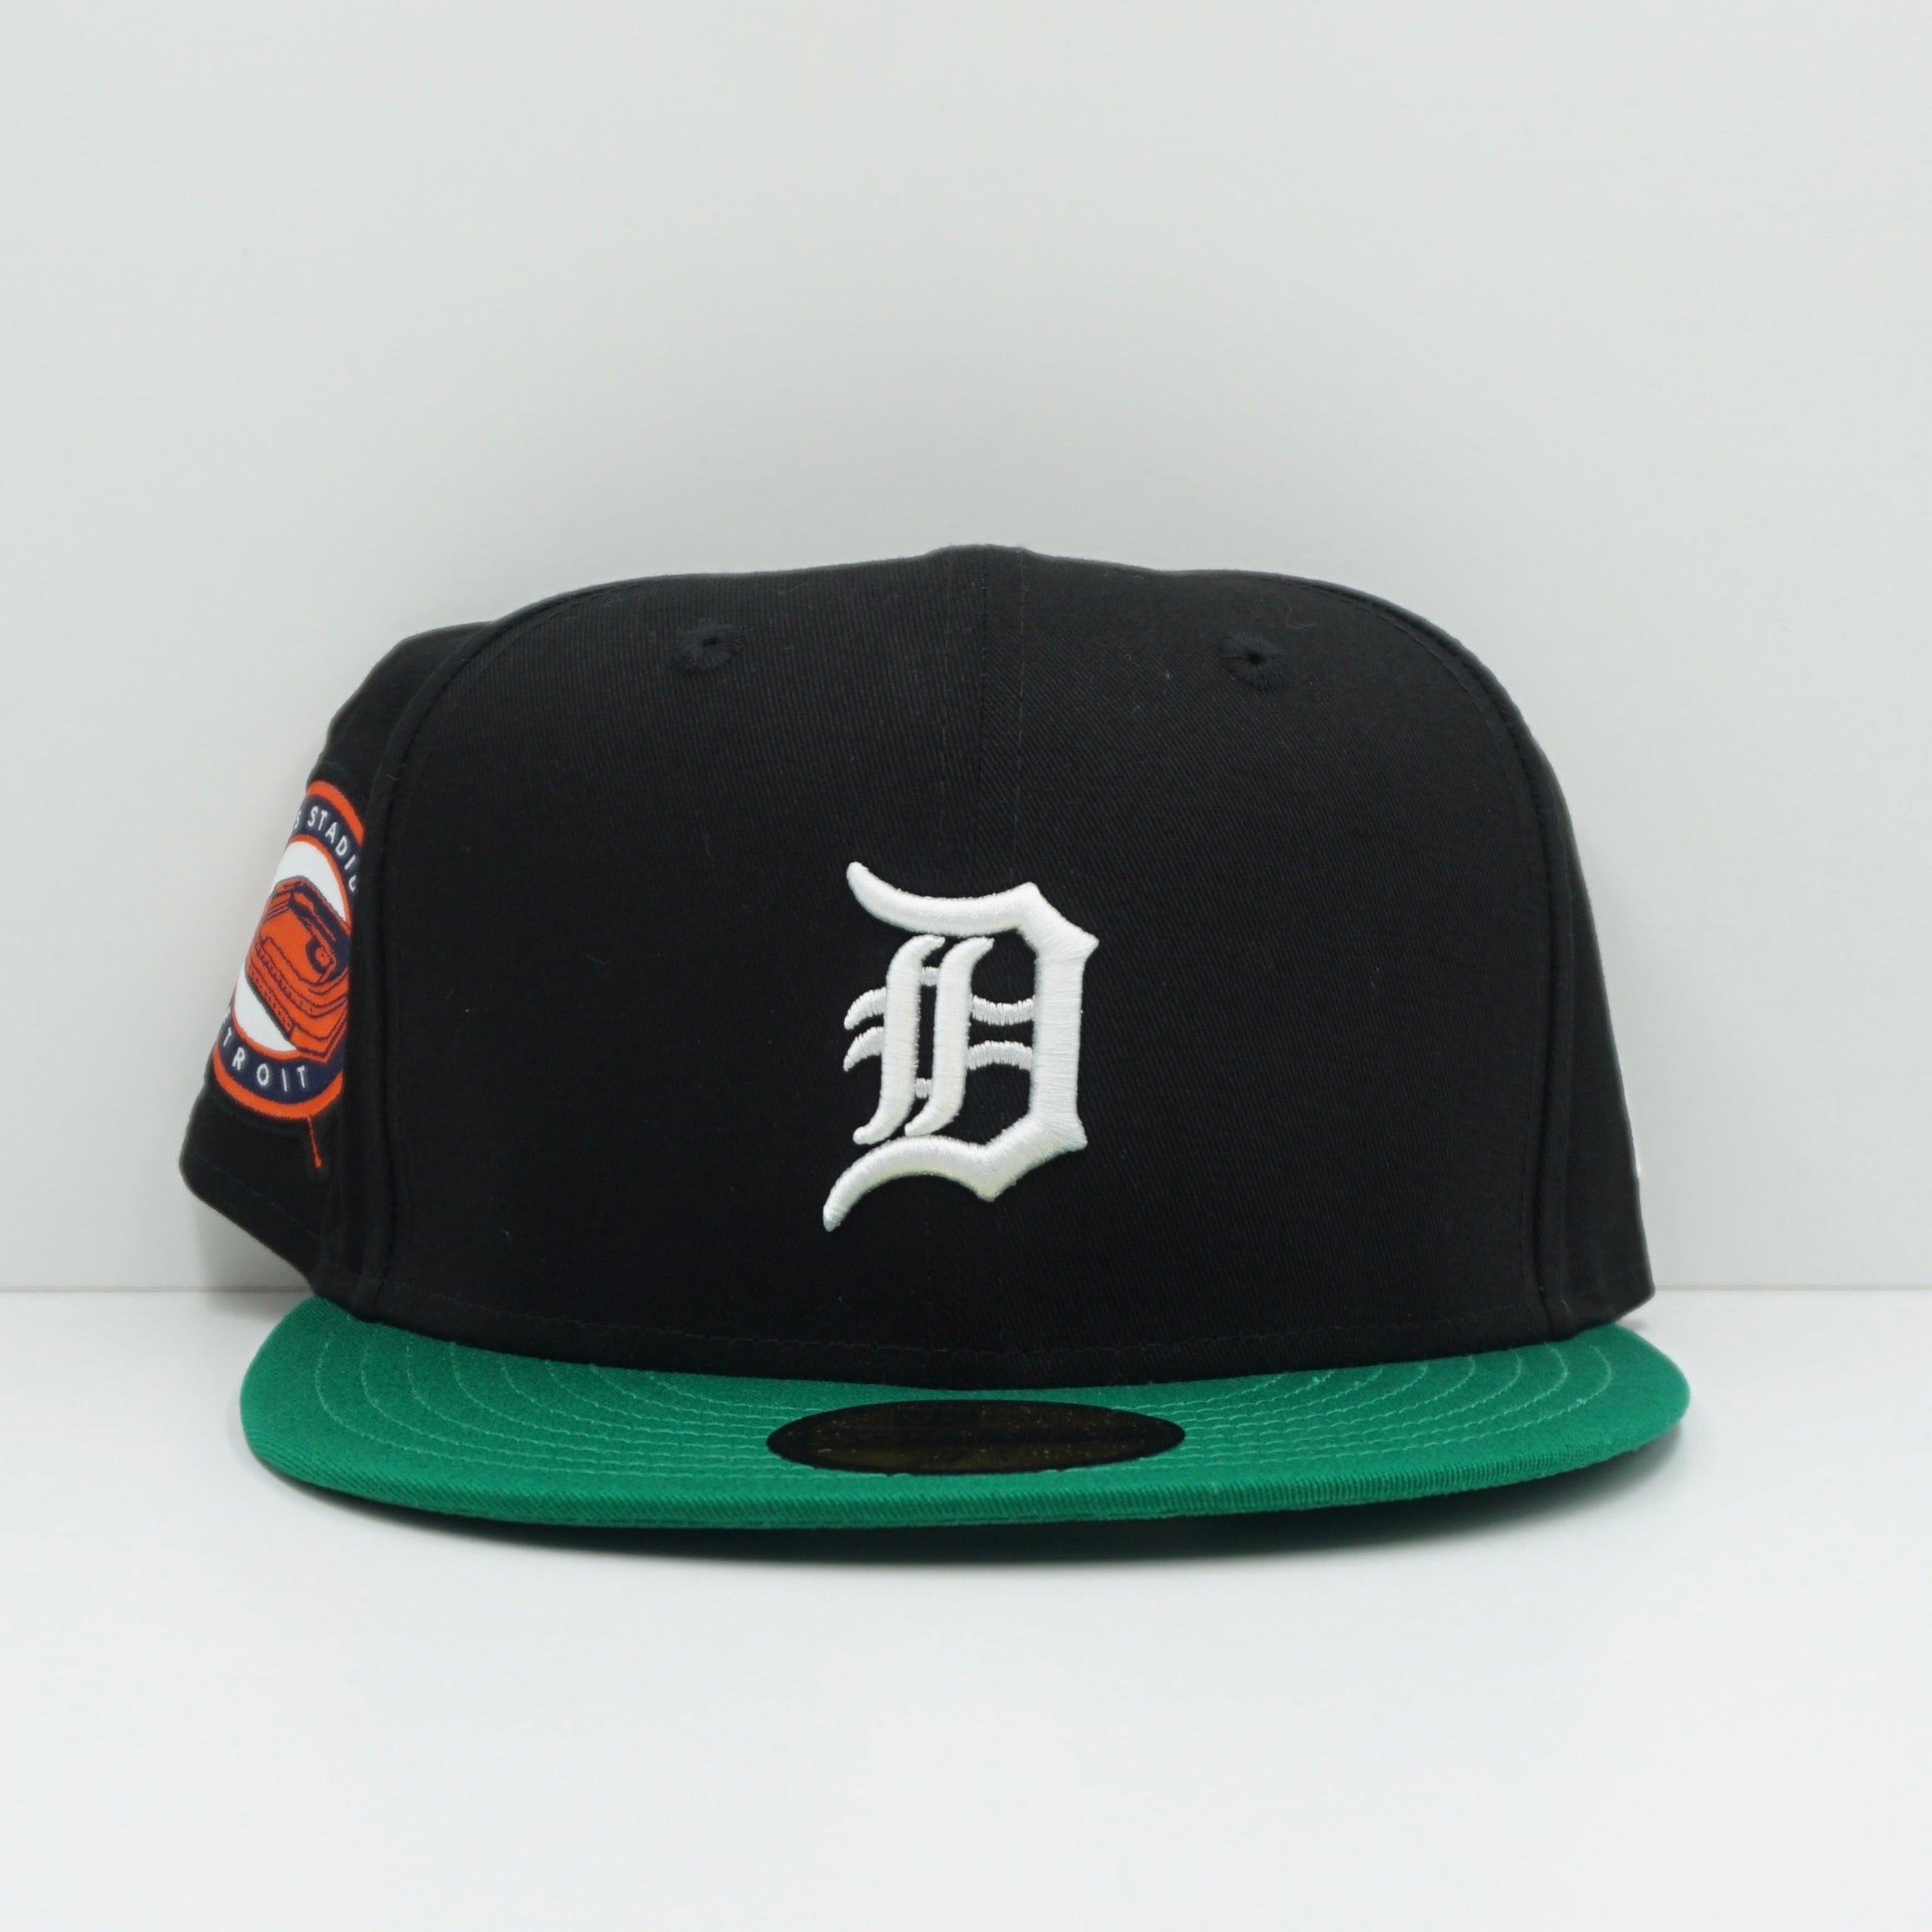 New Era Detroit Tigers Black/Green Fitted Cap